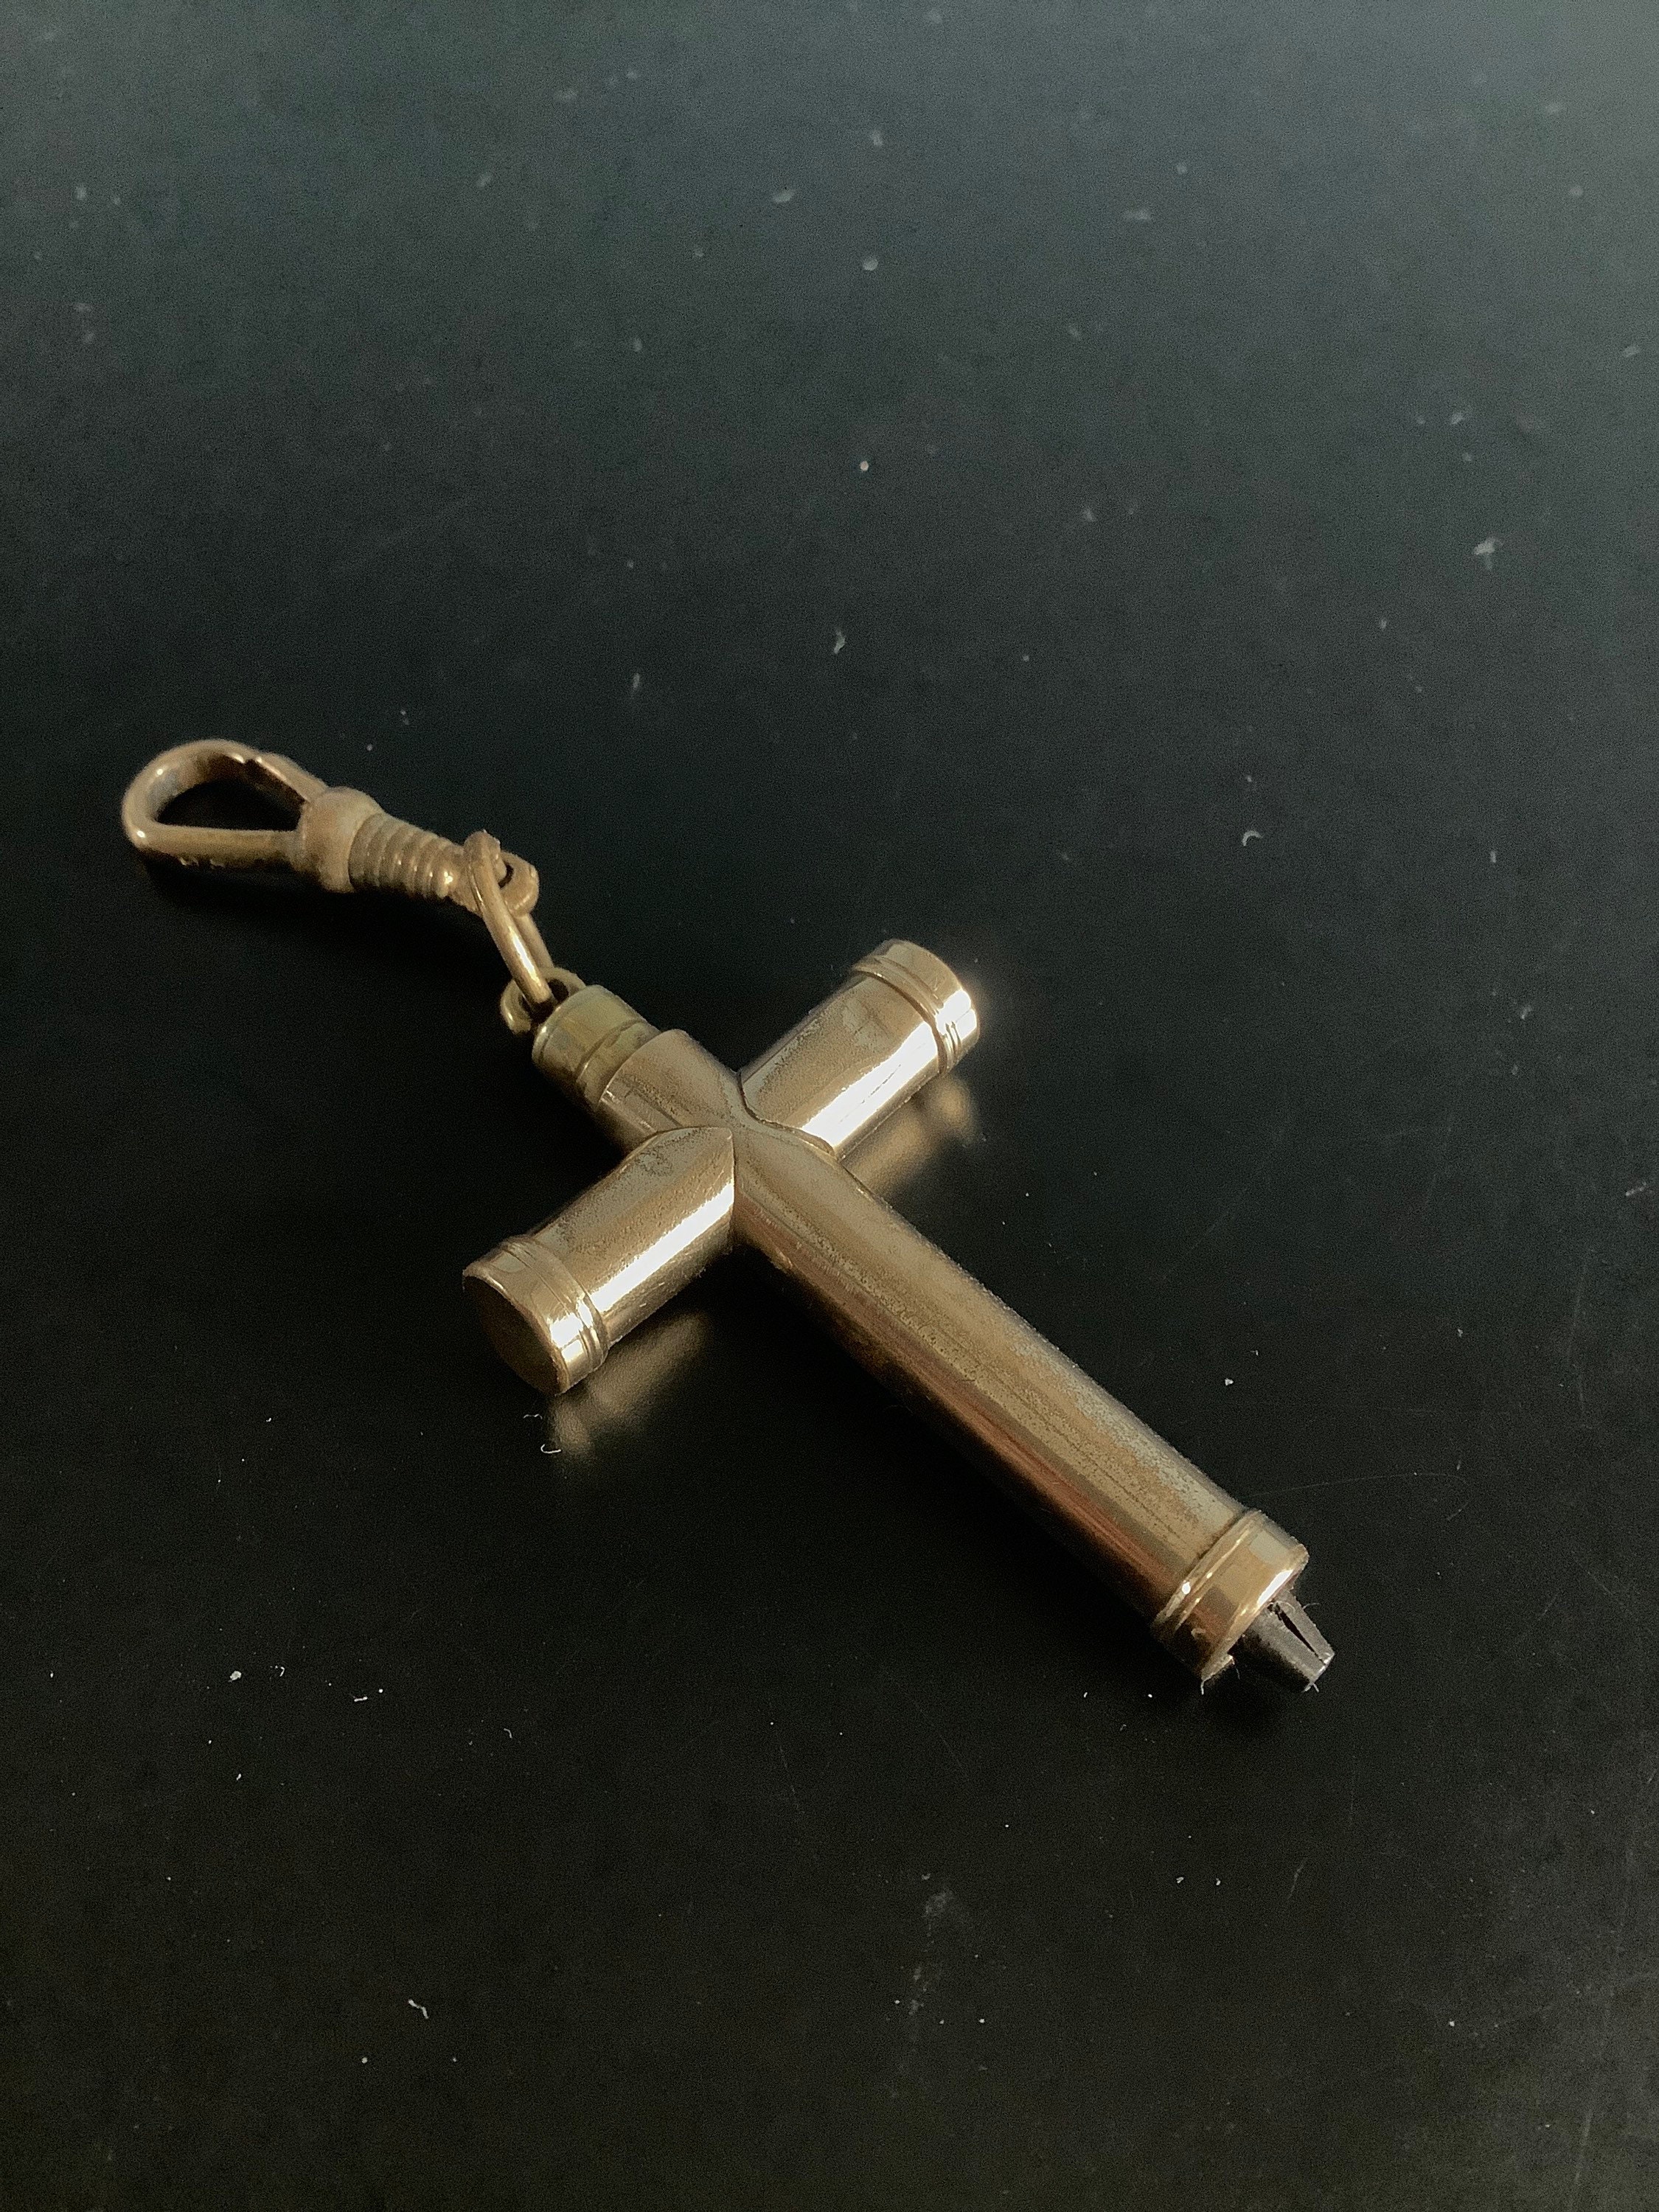 Antique Silver Metal Watch Key Fob Charm Chain